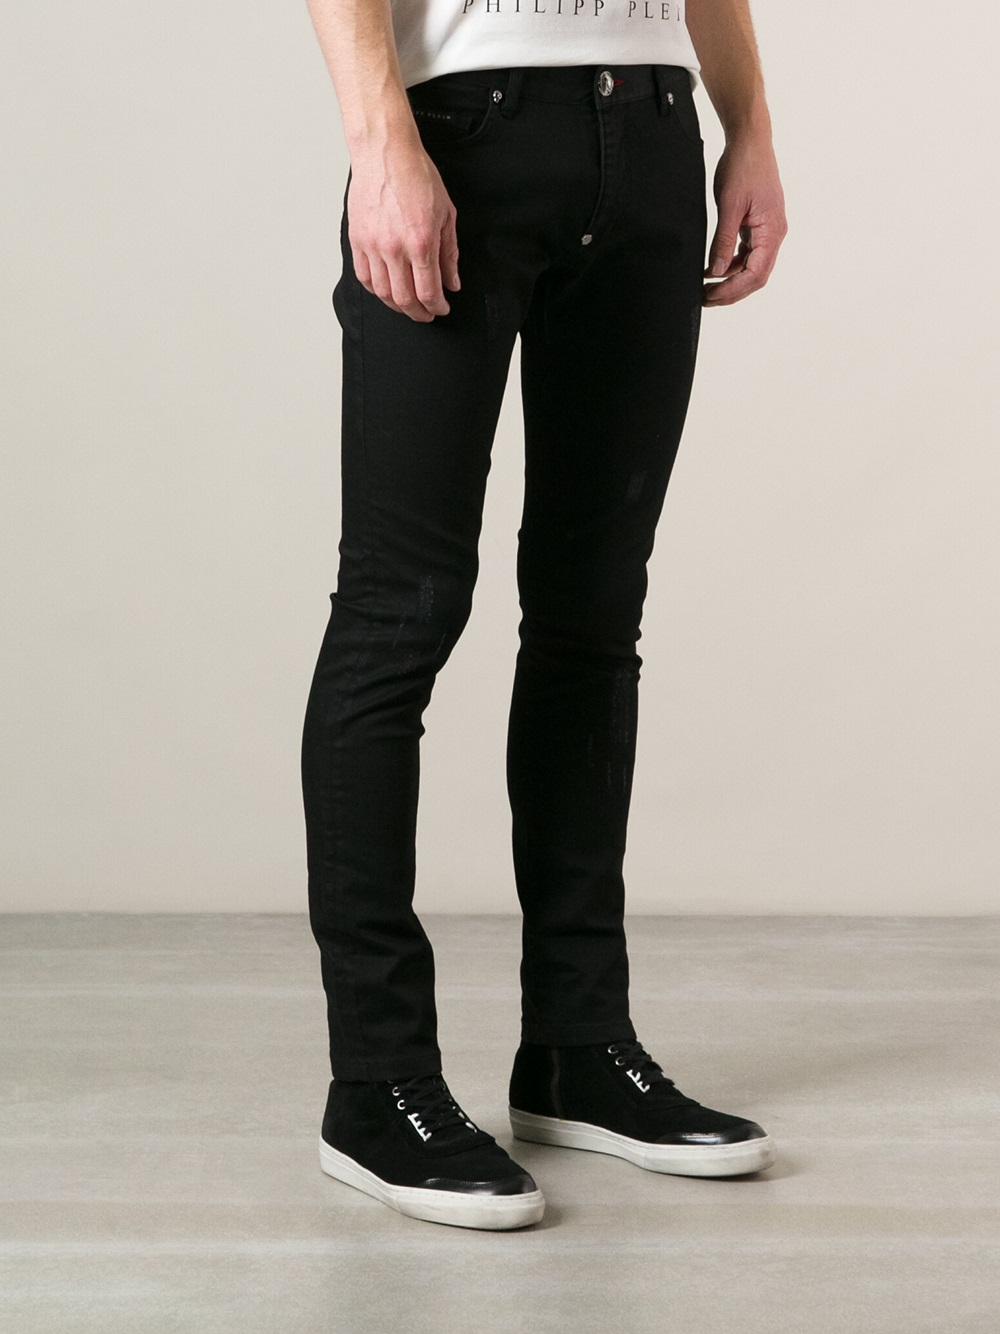 Philipp Plein Skinny Fit Jean in Black for Men - Lyst